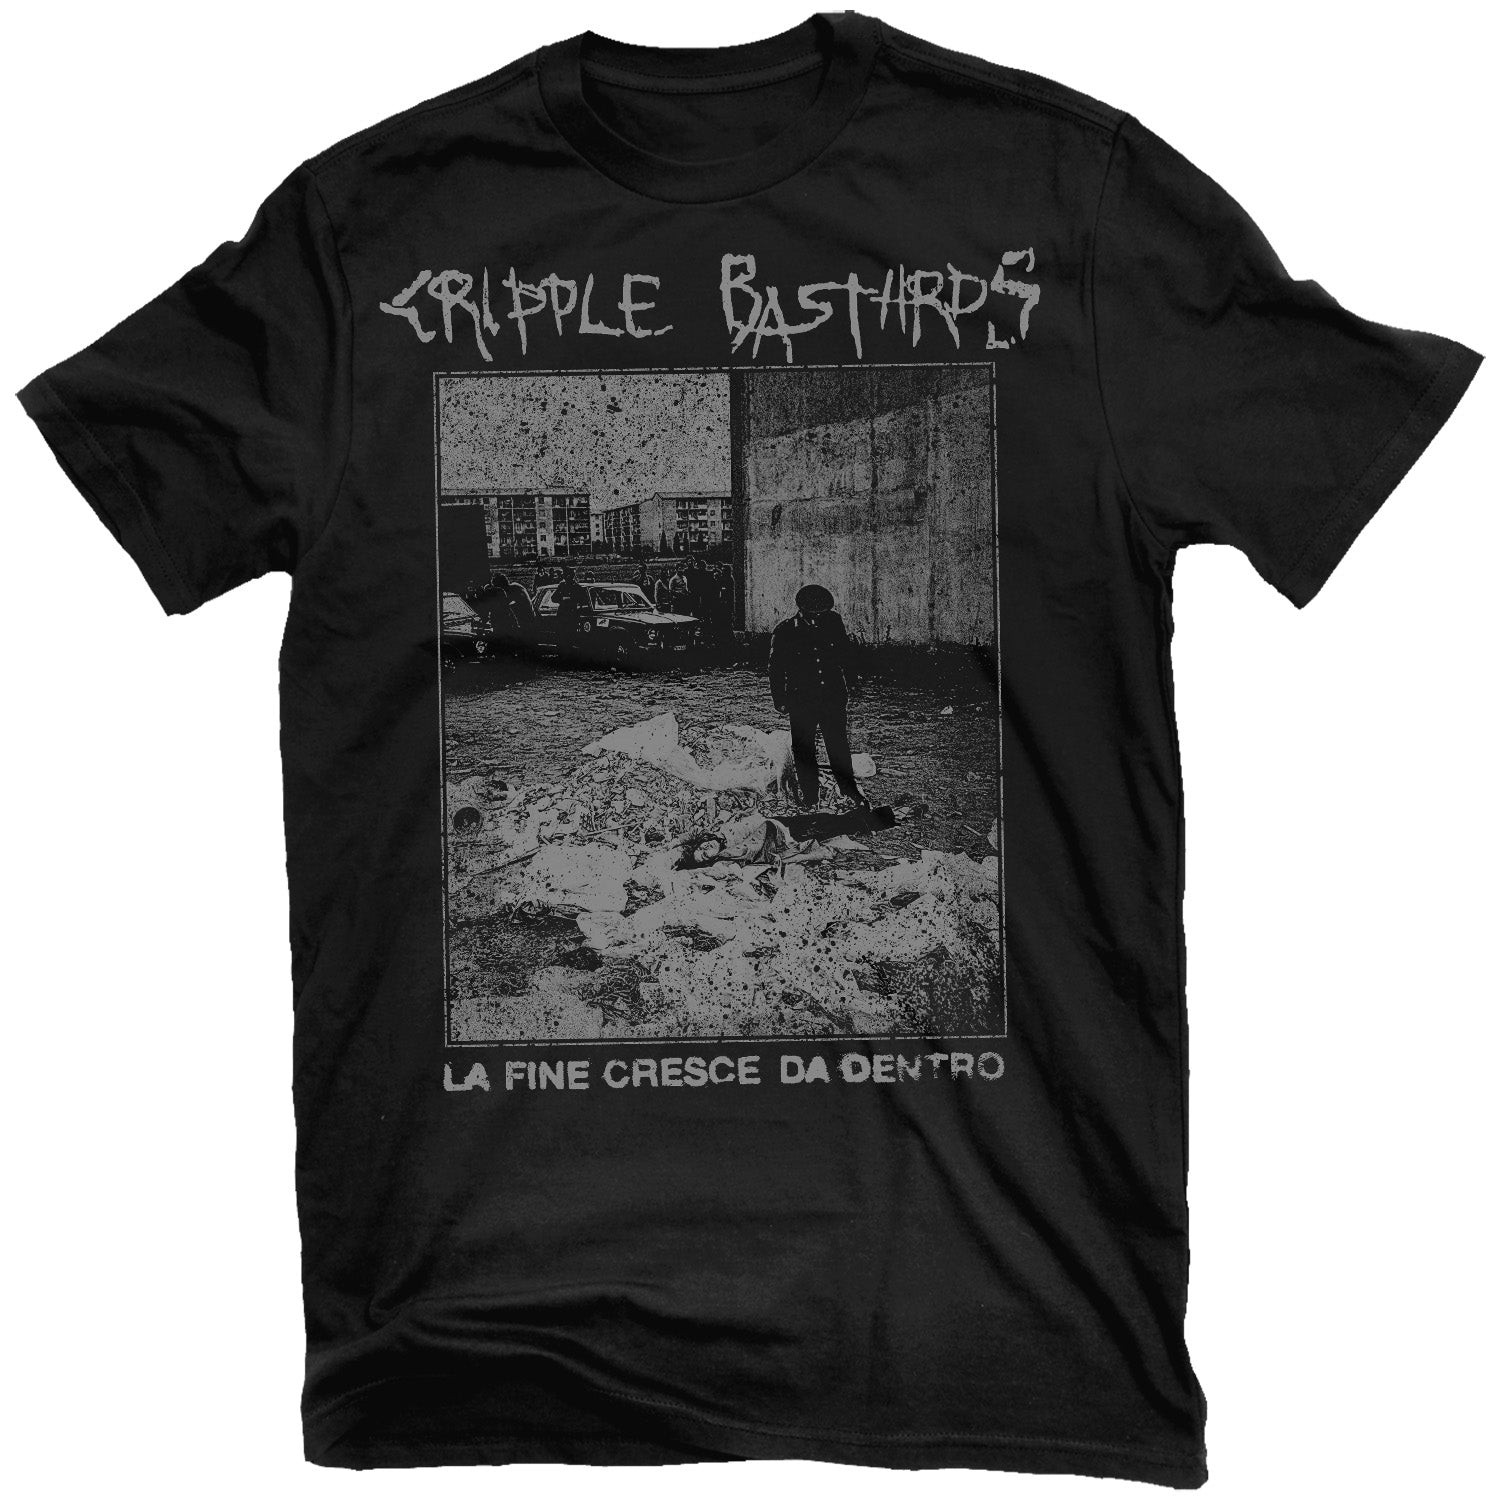 Cripple Bastards "La Fine Cresce Da Dentro" T-Shirt